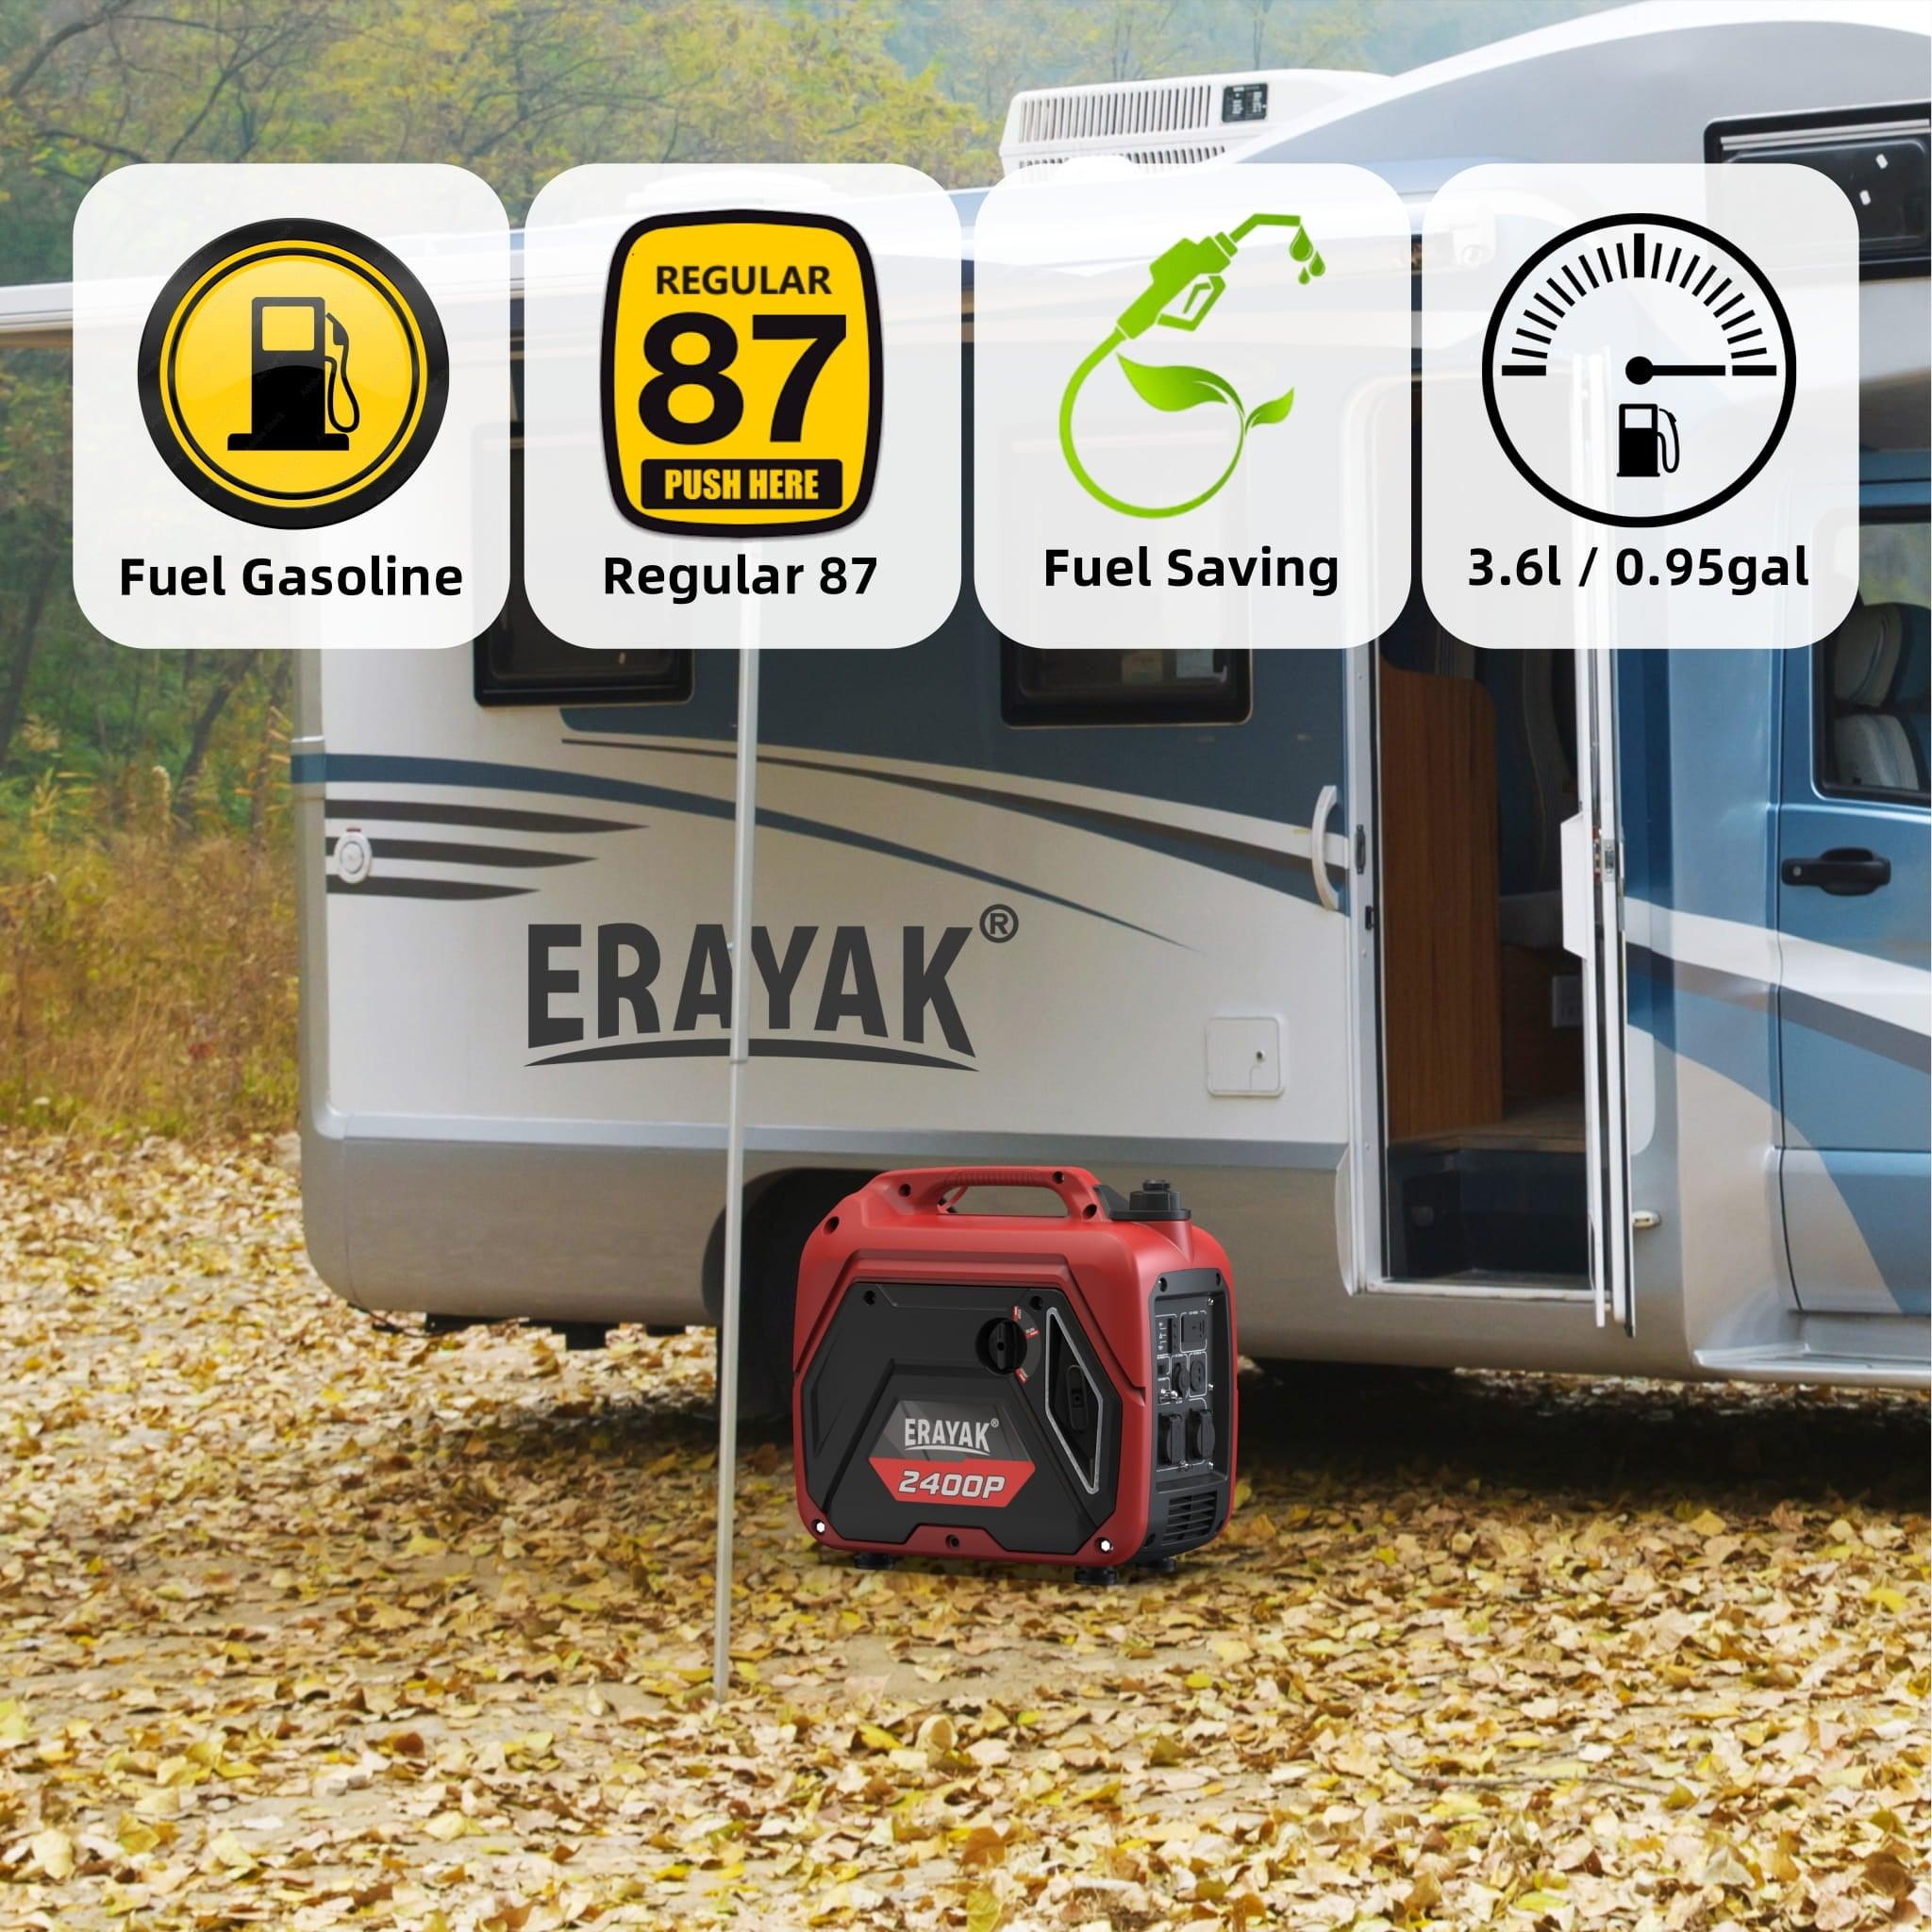 Erayak Portable Inverter Generator 2400W, Super Quiet, For RV, Camping & Home Backup Fuel Gasoline, EYG2400P - Erayak